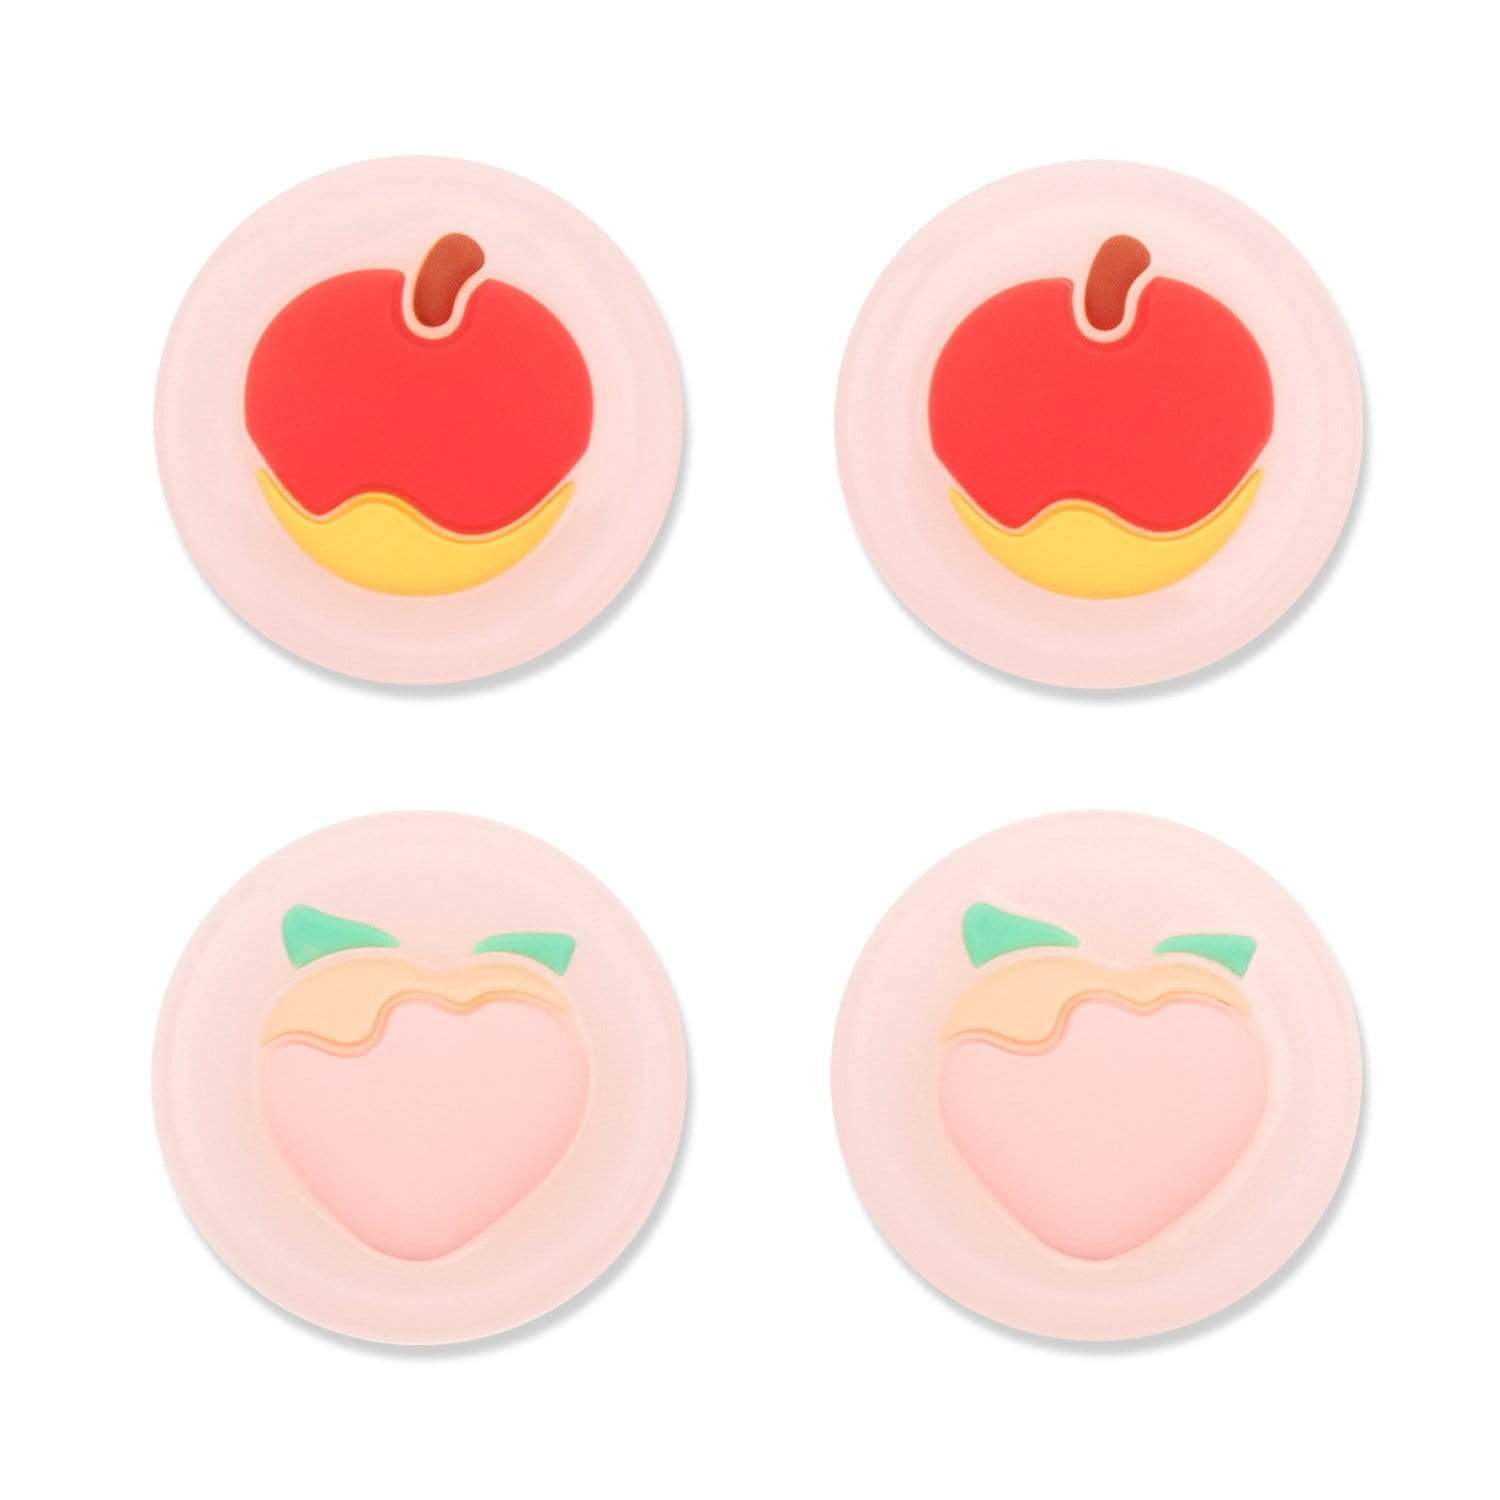 Peach and Apple - Nintendo Switch Joy-Con Thumbcap Grips